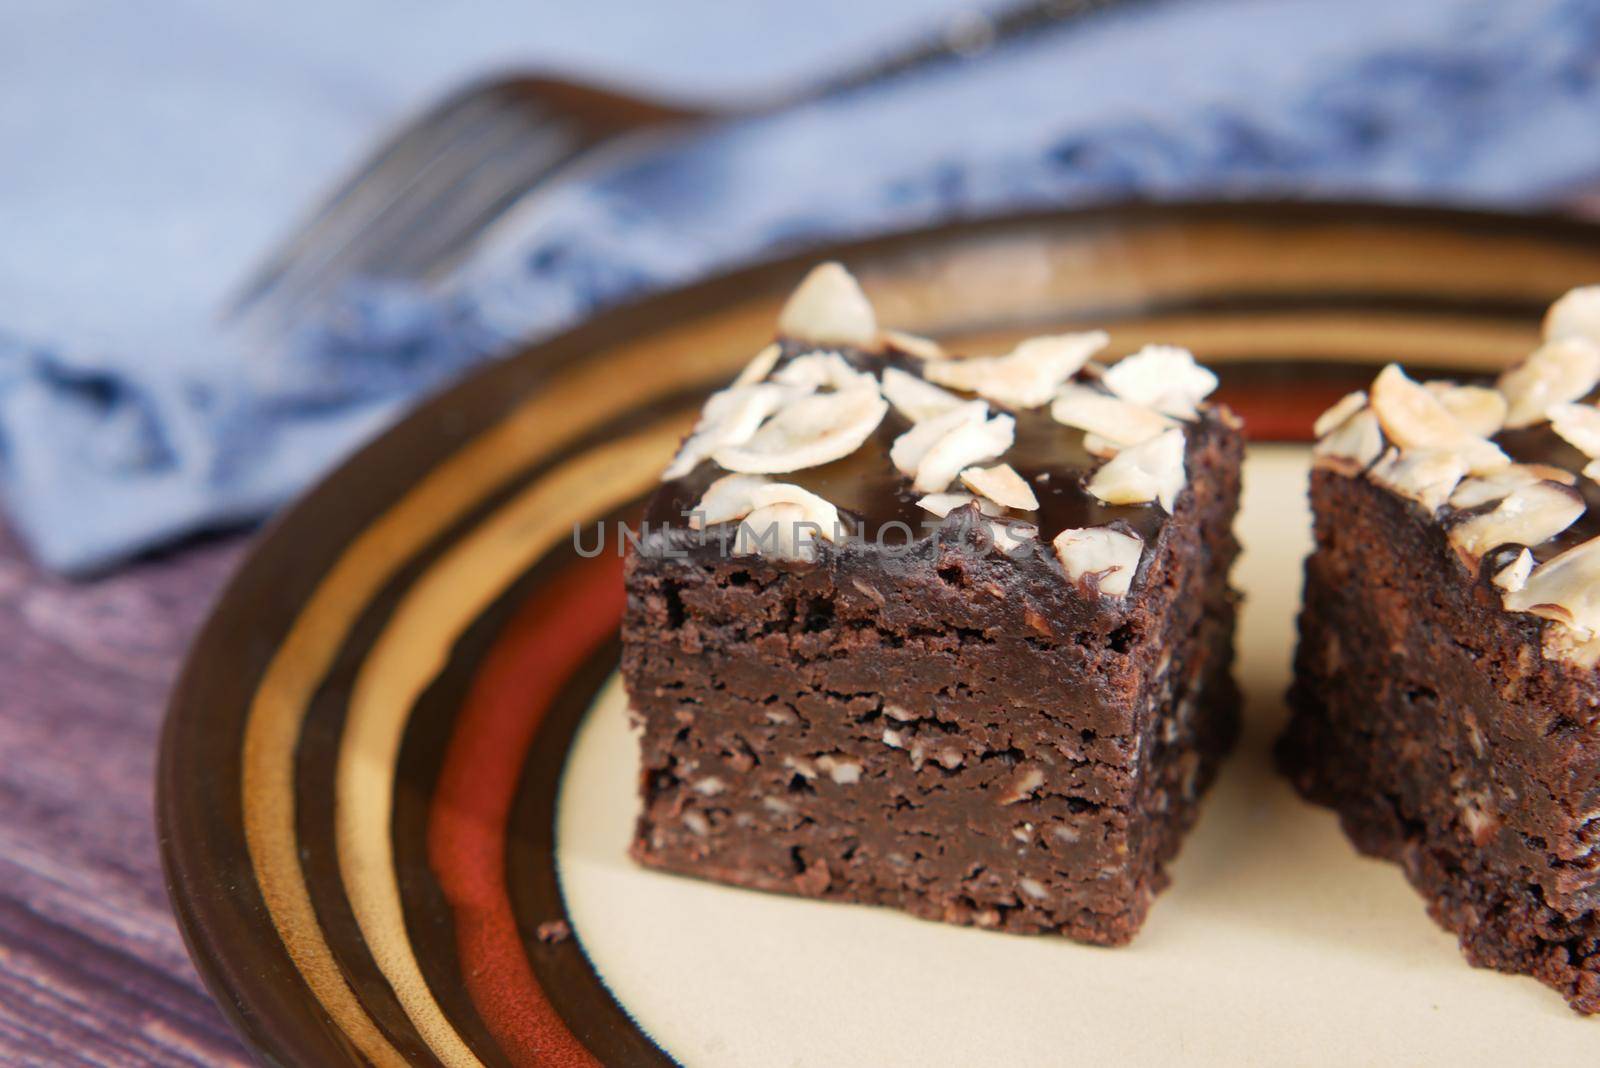 slice of brownie on plate on table .